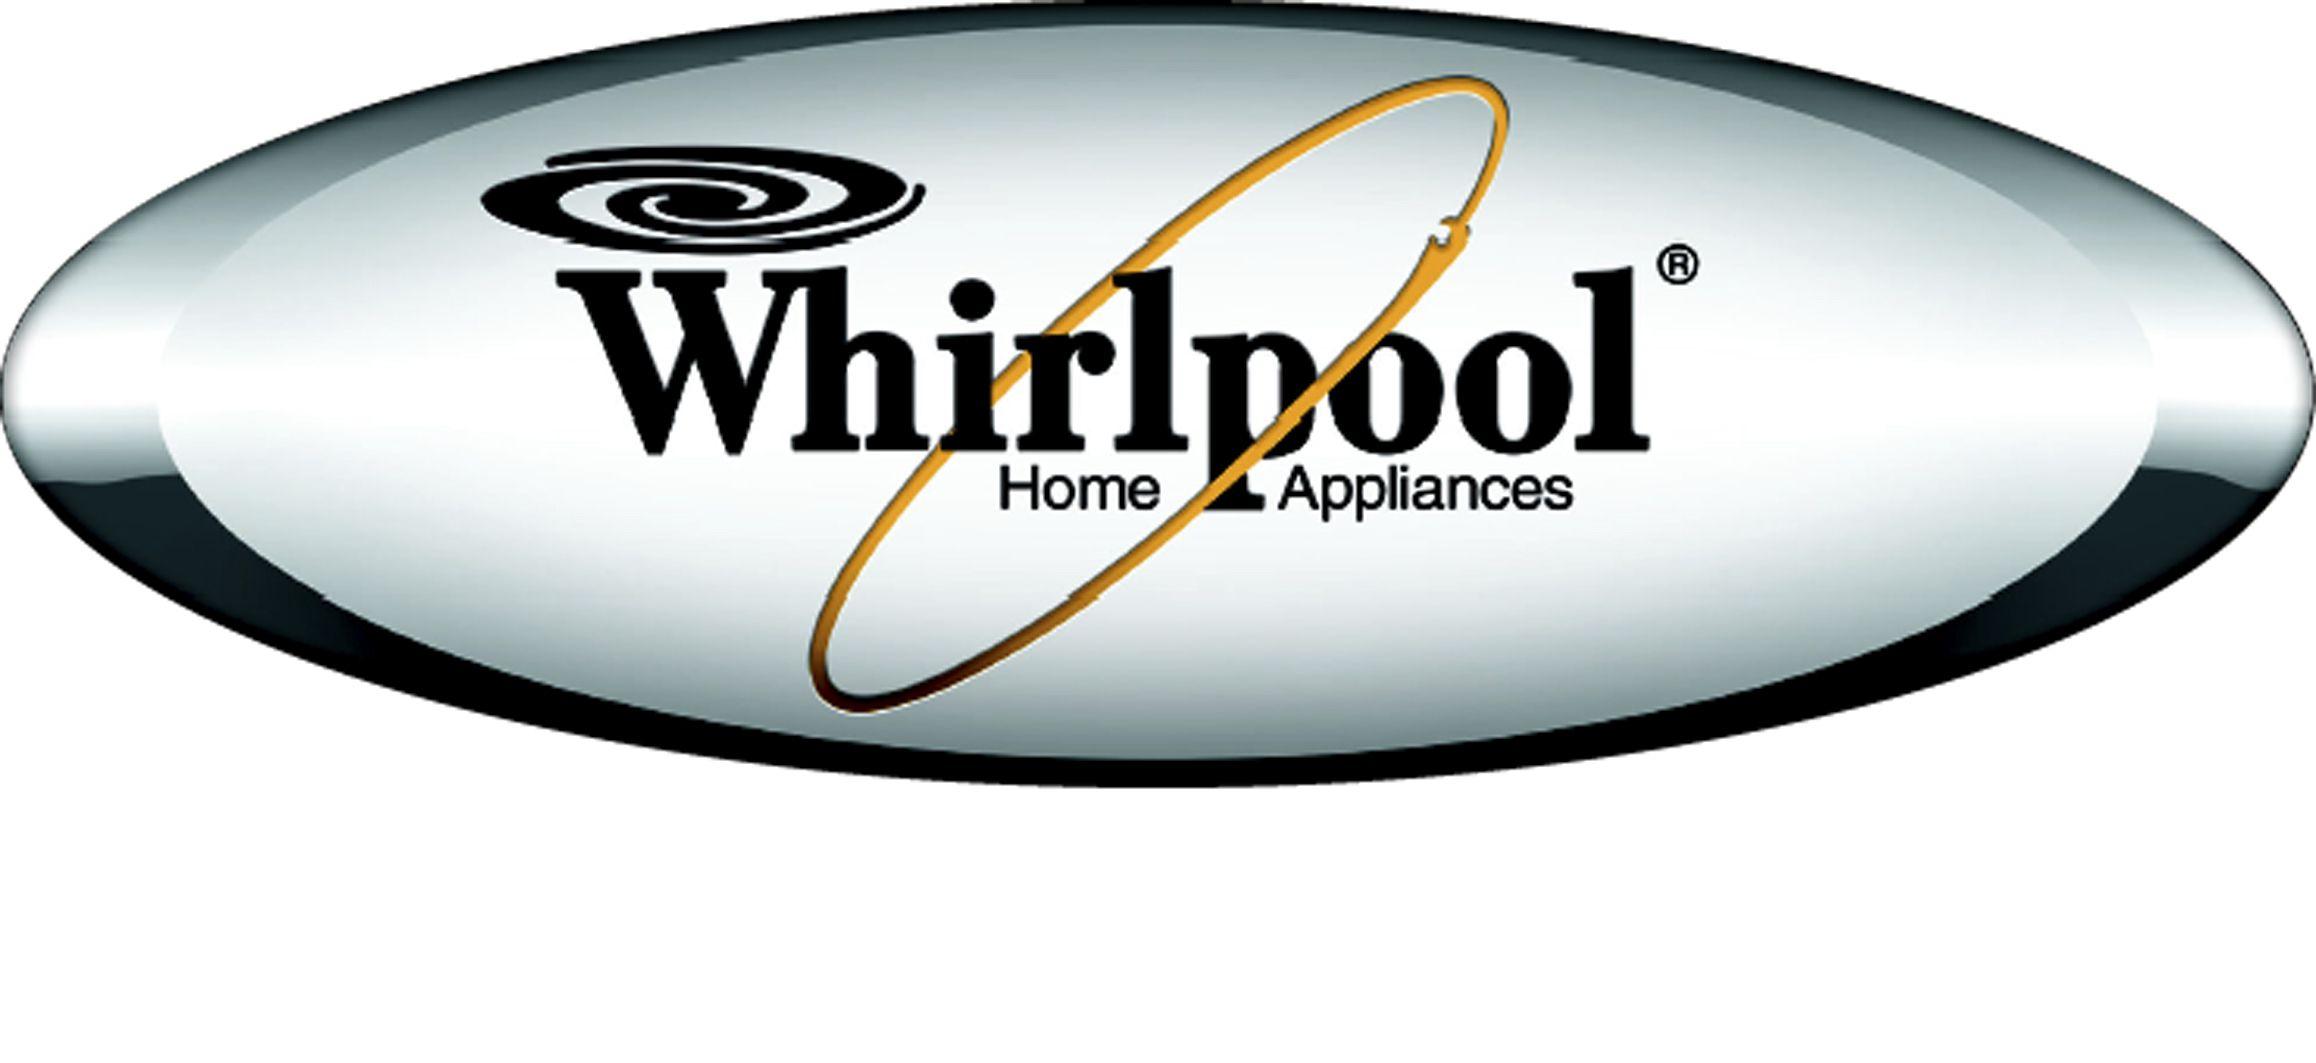 Whirlpool Appliances Logo - Whirlpool Home Appliances Service In Jadavpur, Kolkata 700045